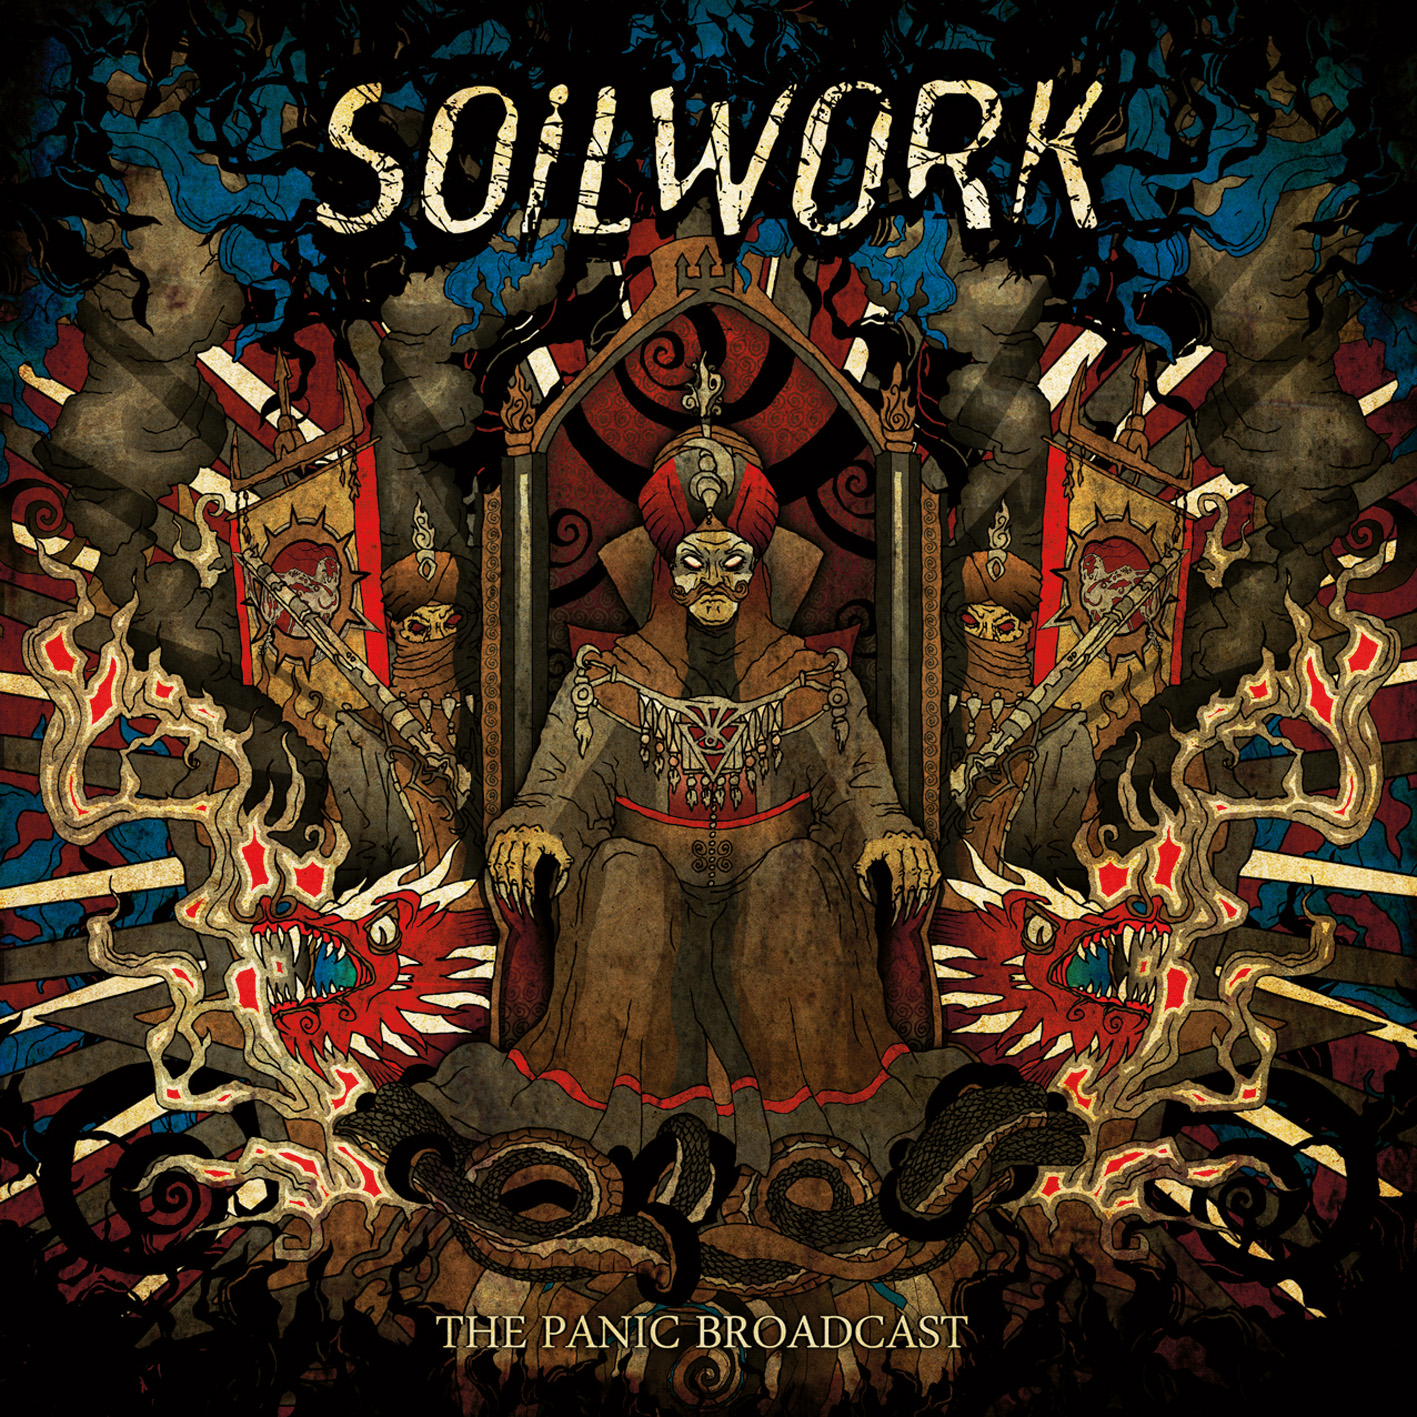 CD Soilwork - The panic broadcast